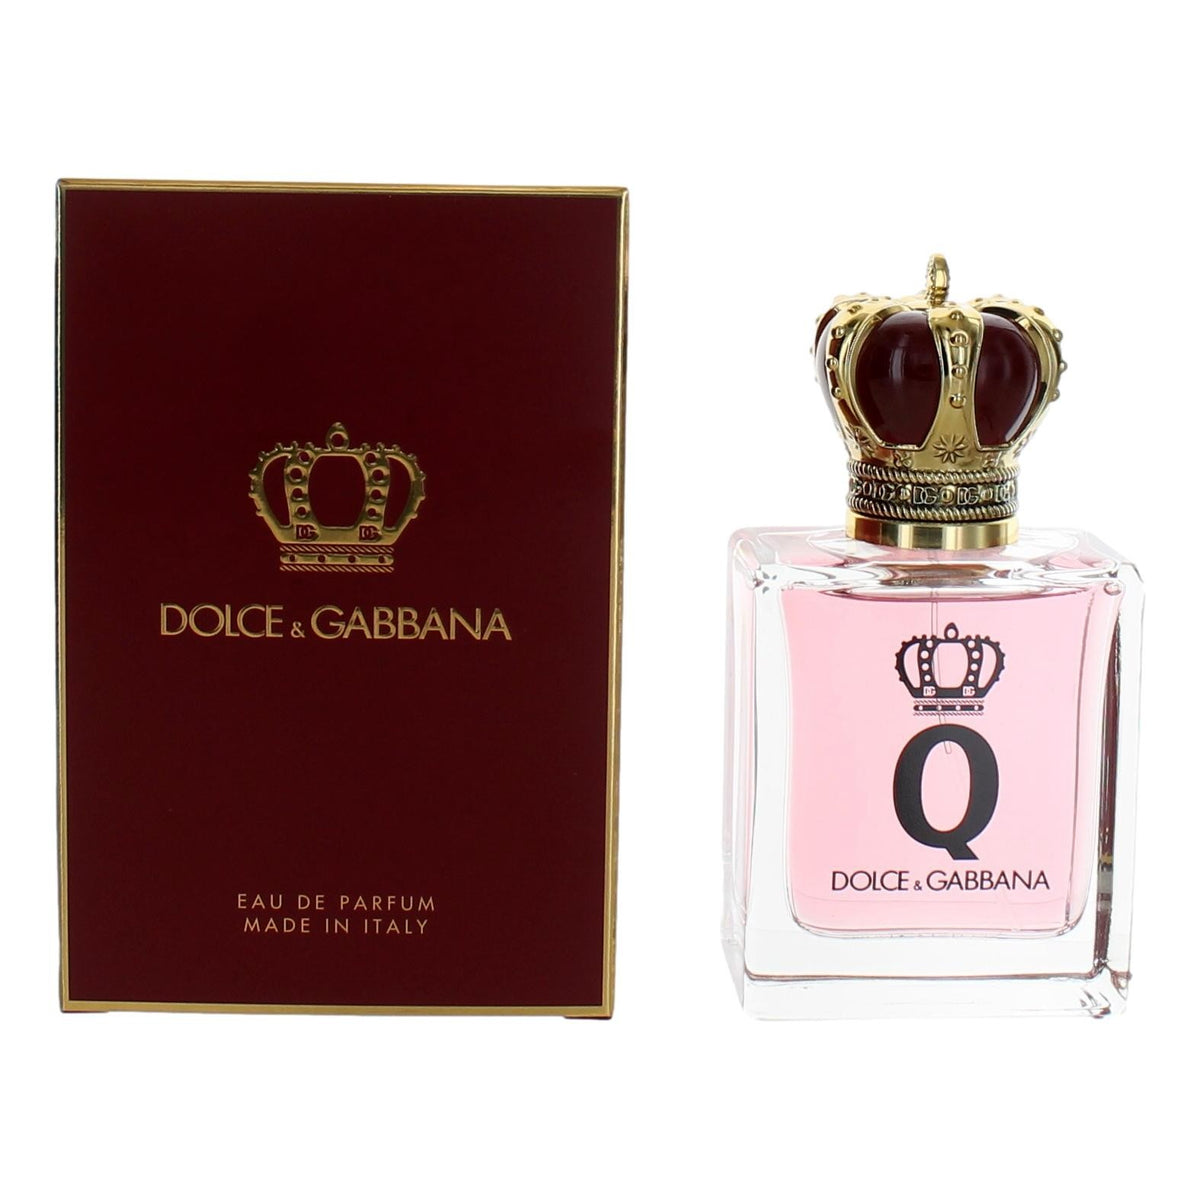 Q by Dolce & Gabbana, 1.7 oz Eau de Parfum Spray for Women